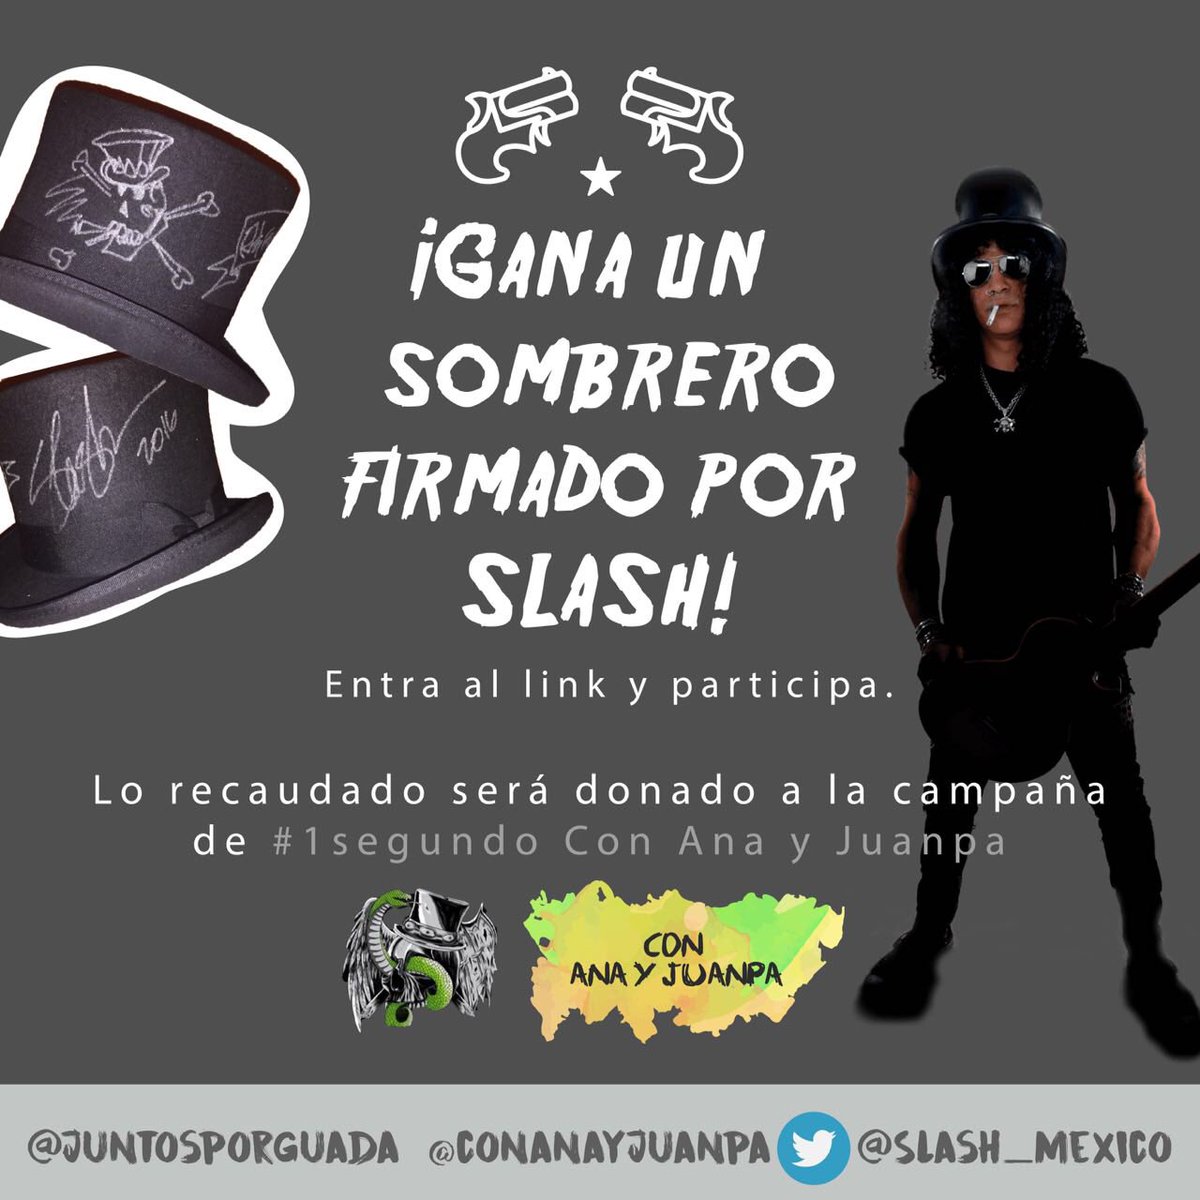 RT @Slash_Mexico: Gana un ???? firmado por @Slash Y AYUDA https://t.co/IZCwTc2sWH #SlashMexico #Slash #GunsNRoses https://t.co/qEwVJlEmSN